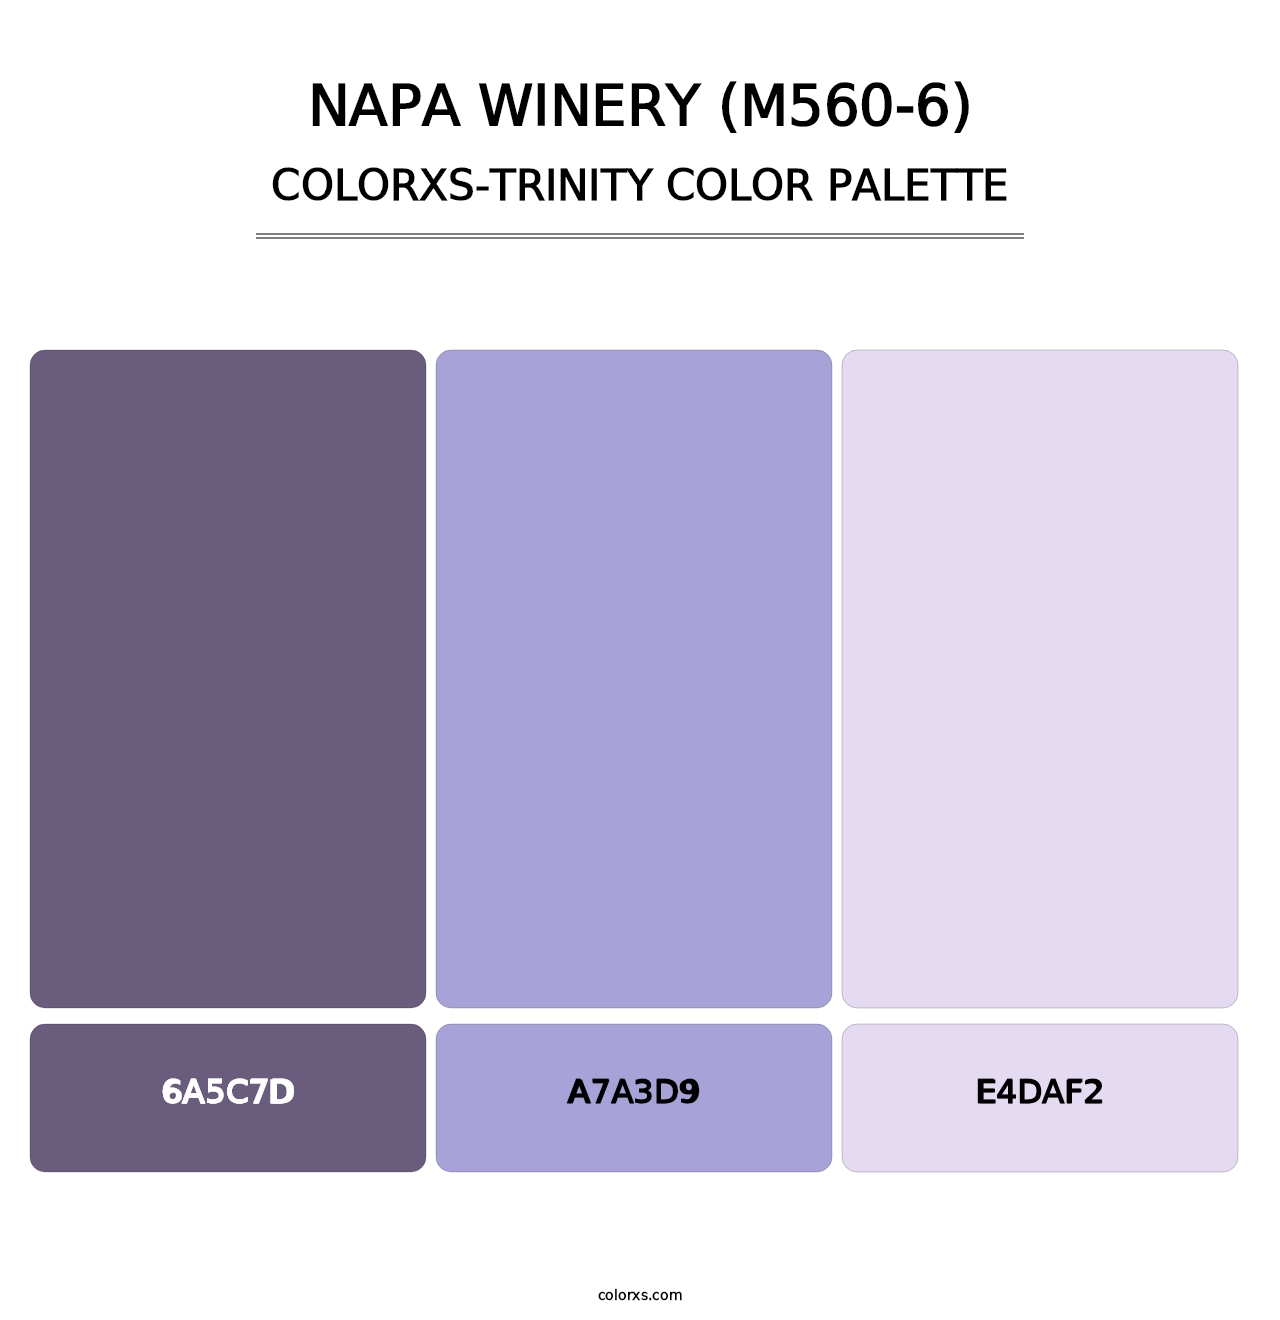 Napa Winery (M560-6) - Colorxs Trinity Palette